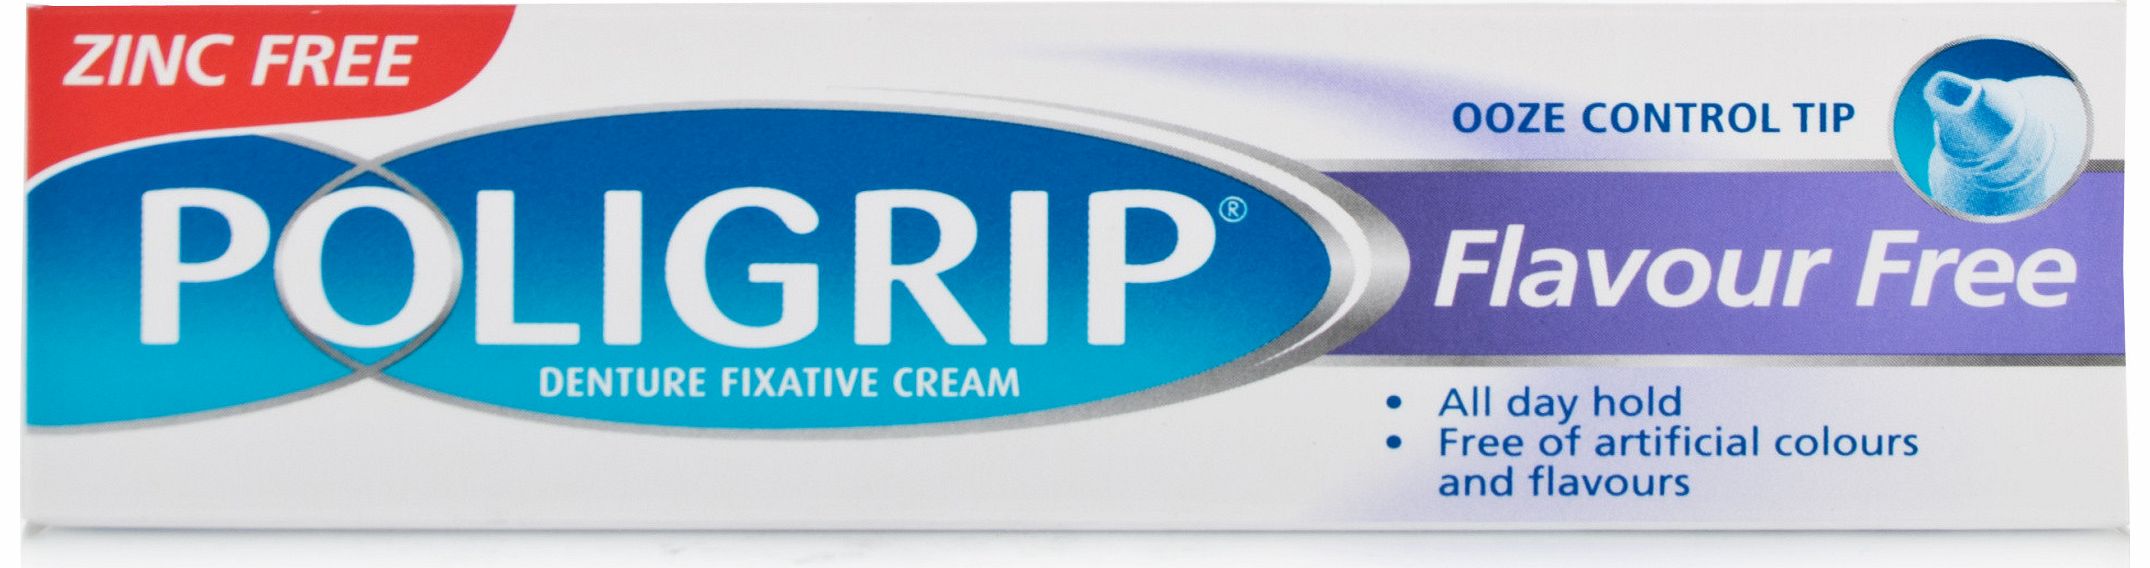 Poligrip Denture Fixative Cream Flavour Free